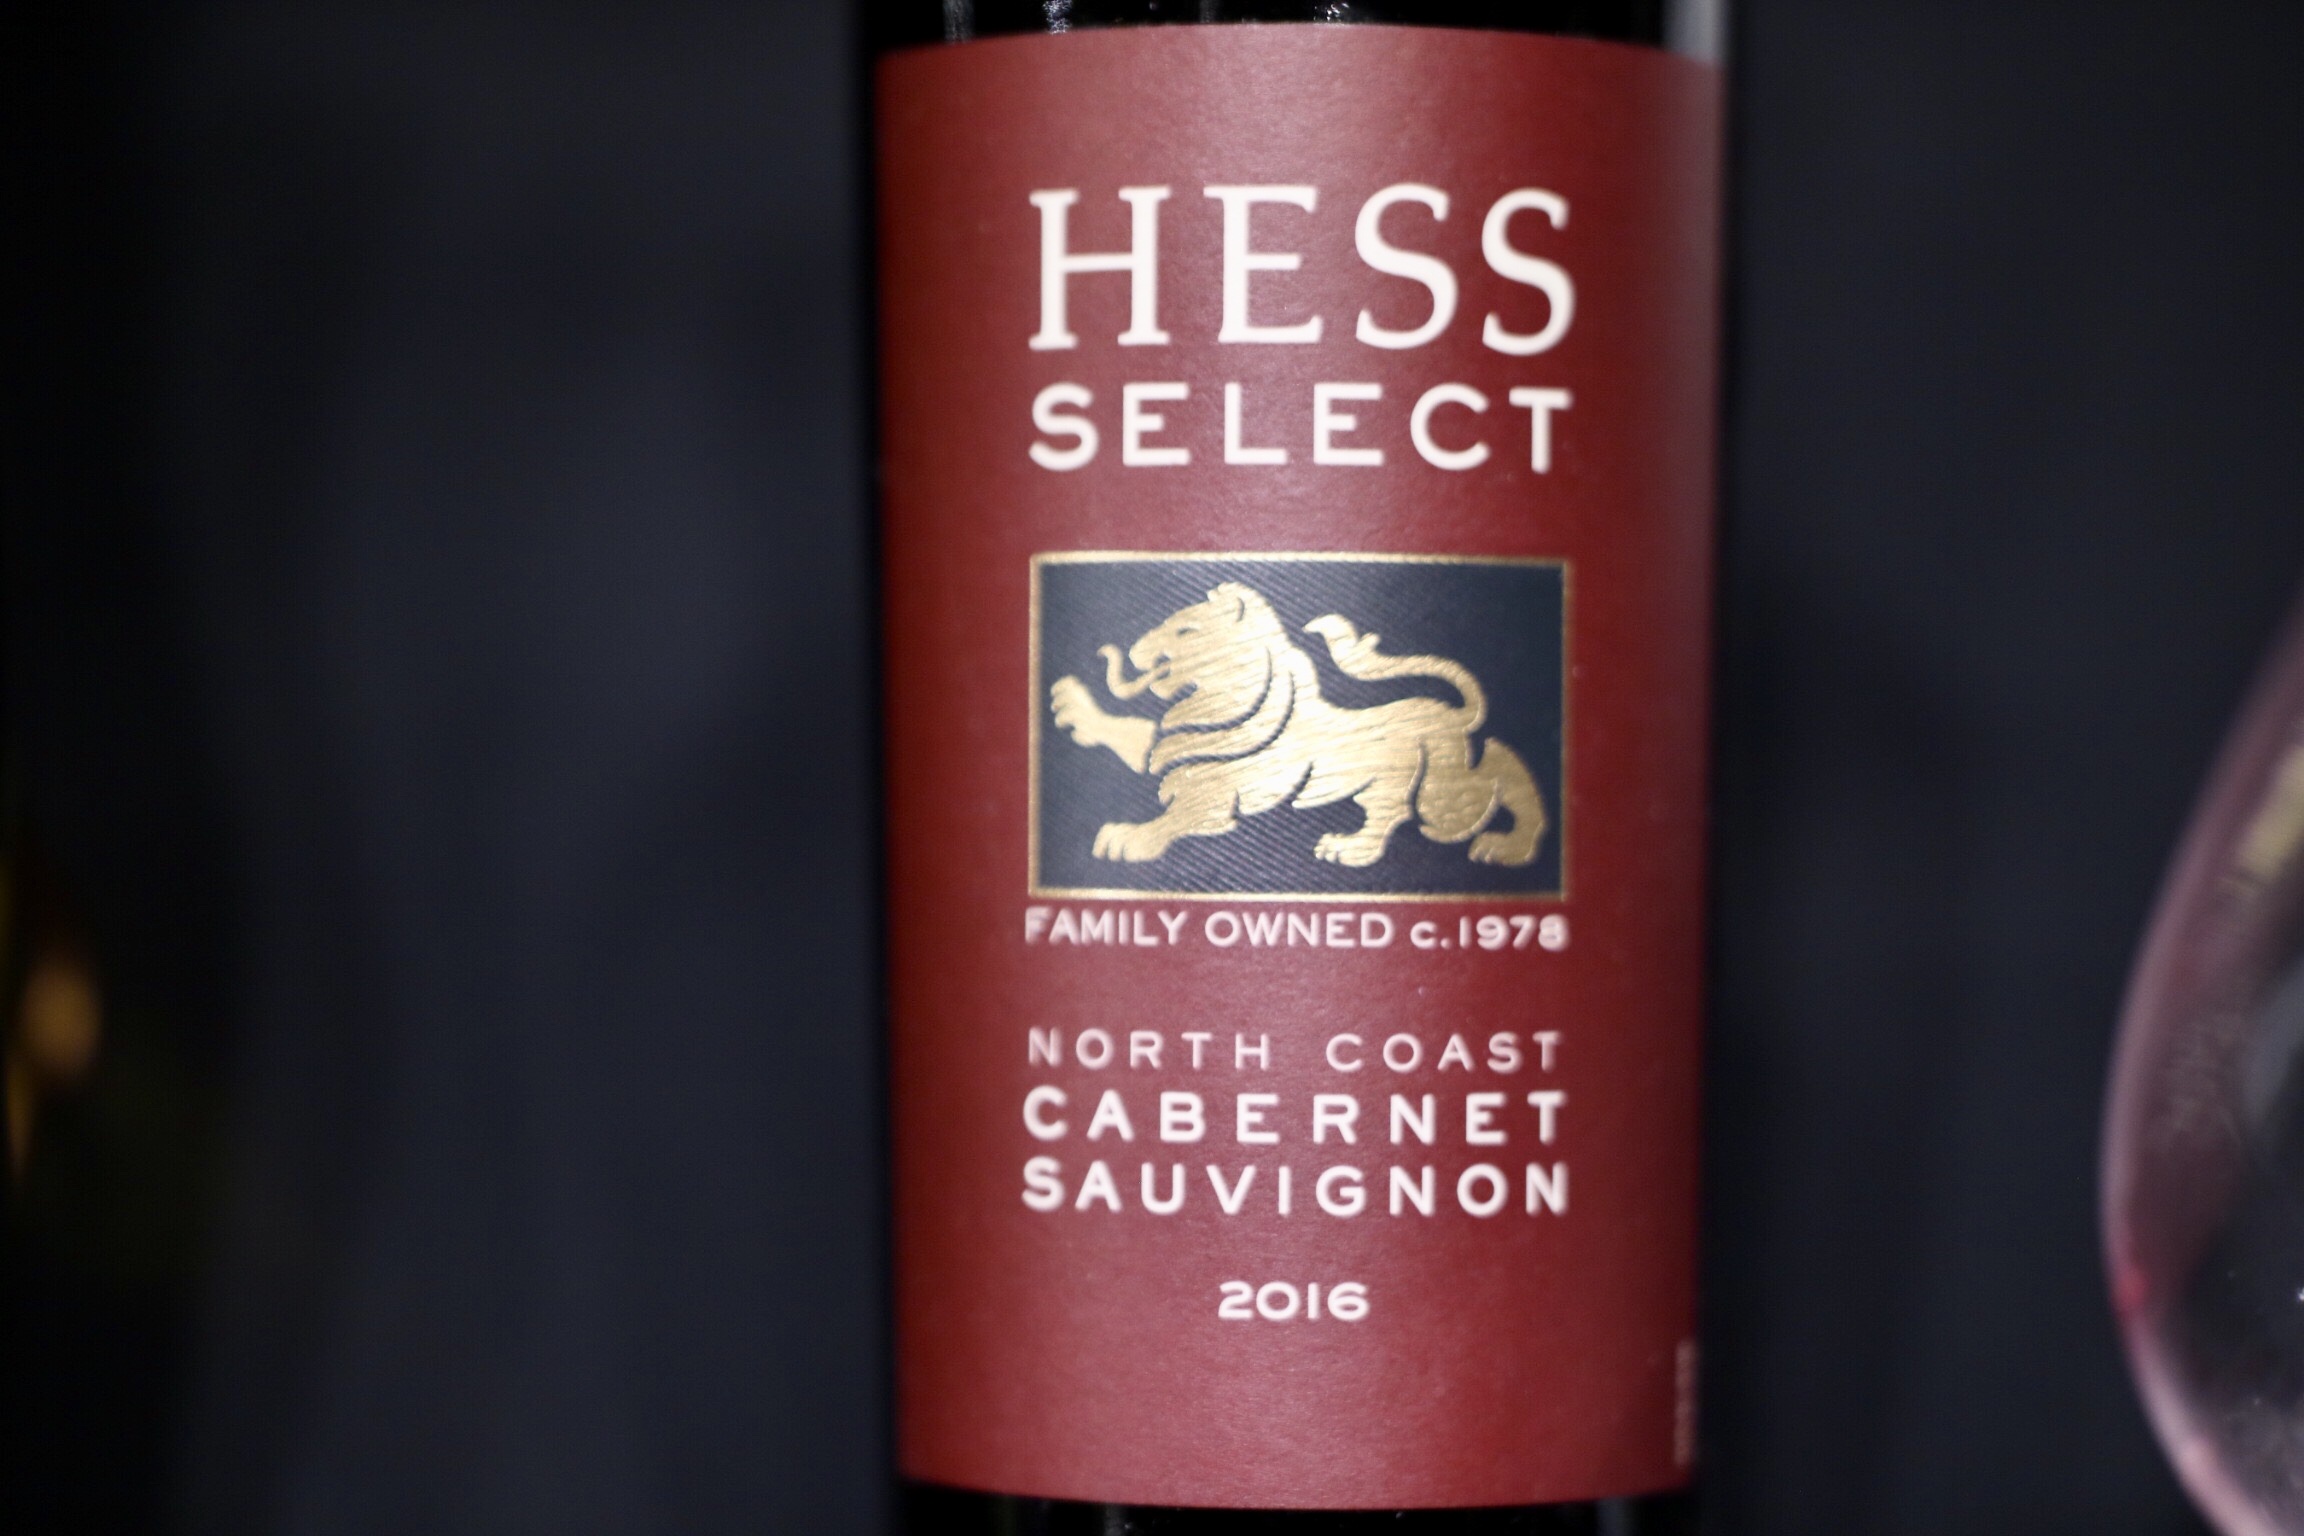 Hess Select Cabernet Sauvignon 2016